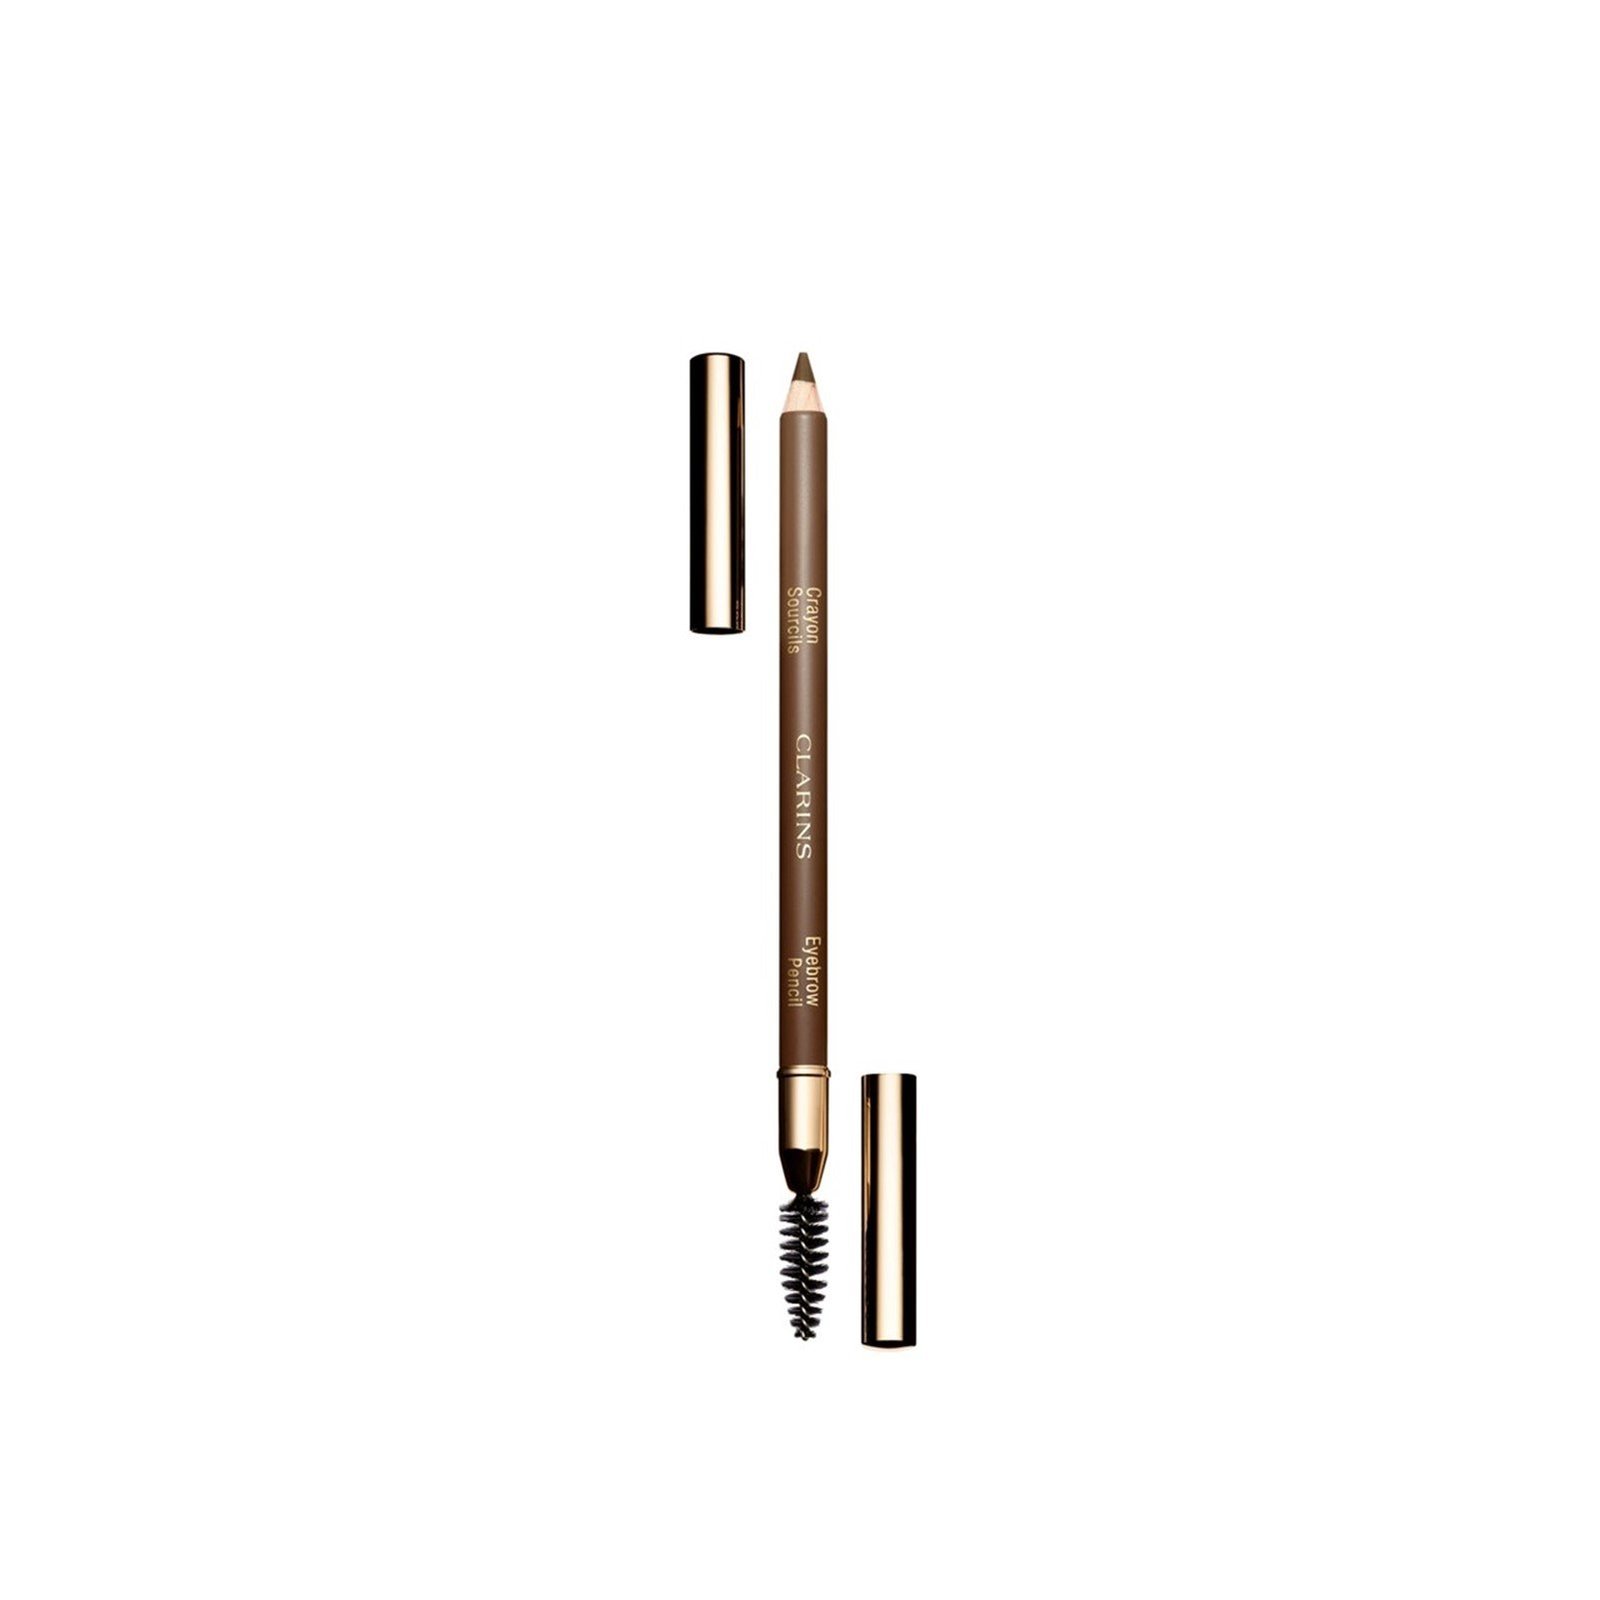 Clarins Eyebrow Pencil Long-Wearing 03 Soft Blond 1.1g (0.04 oz)